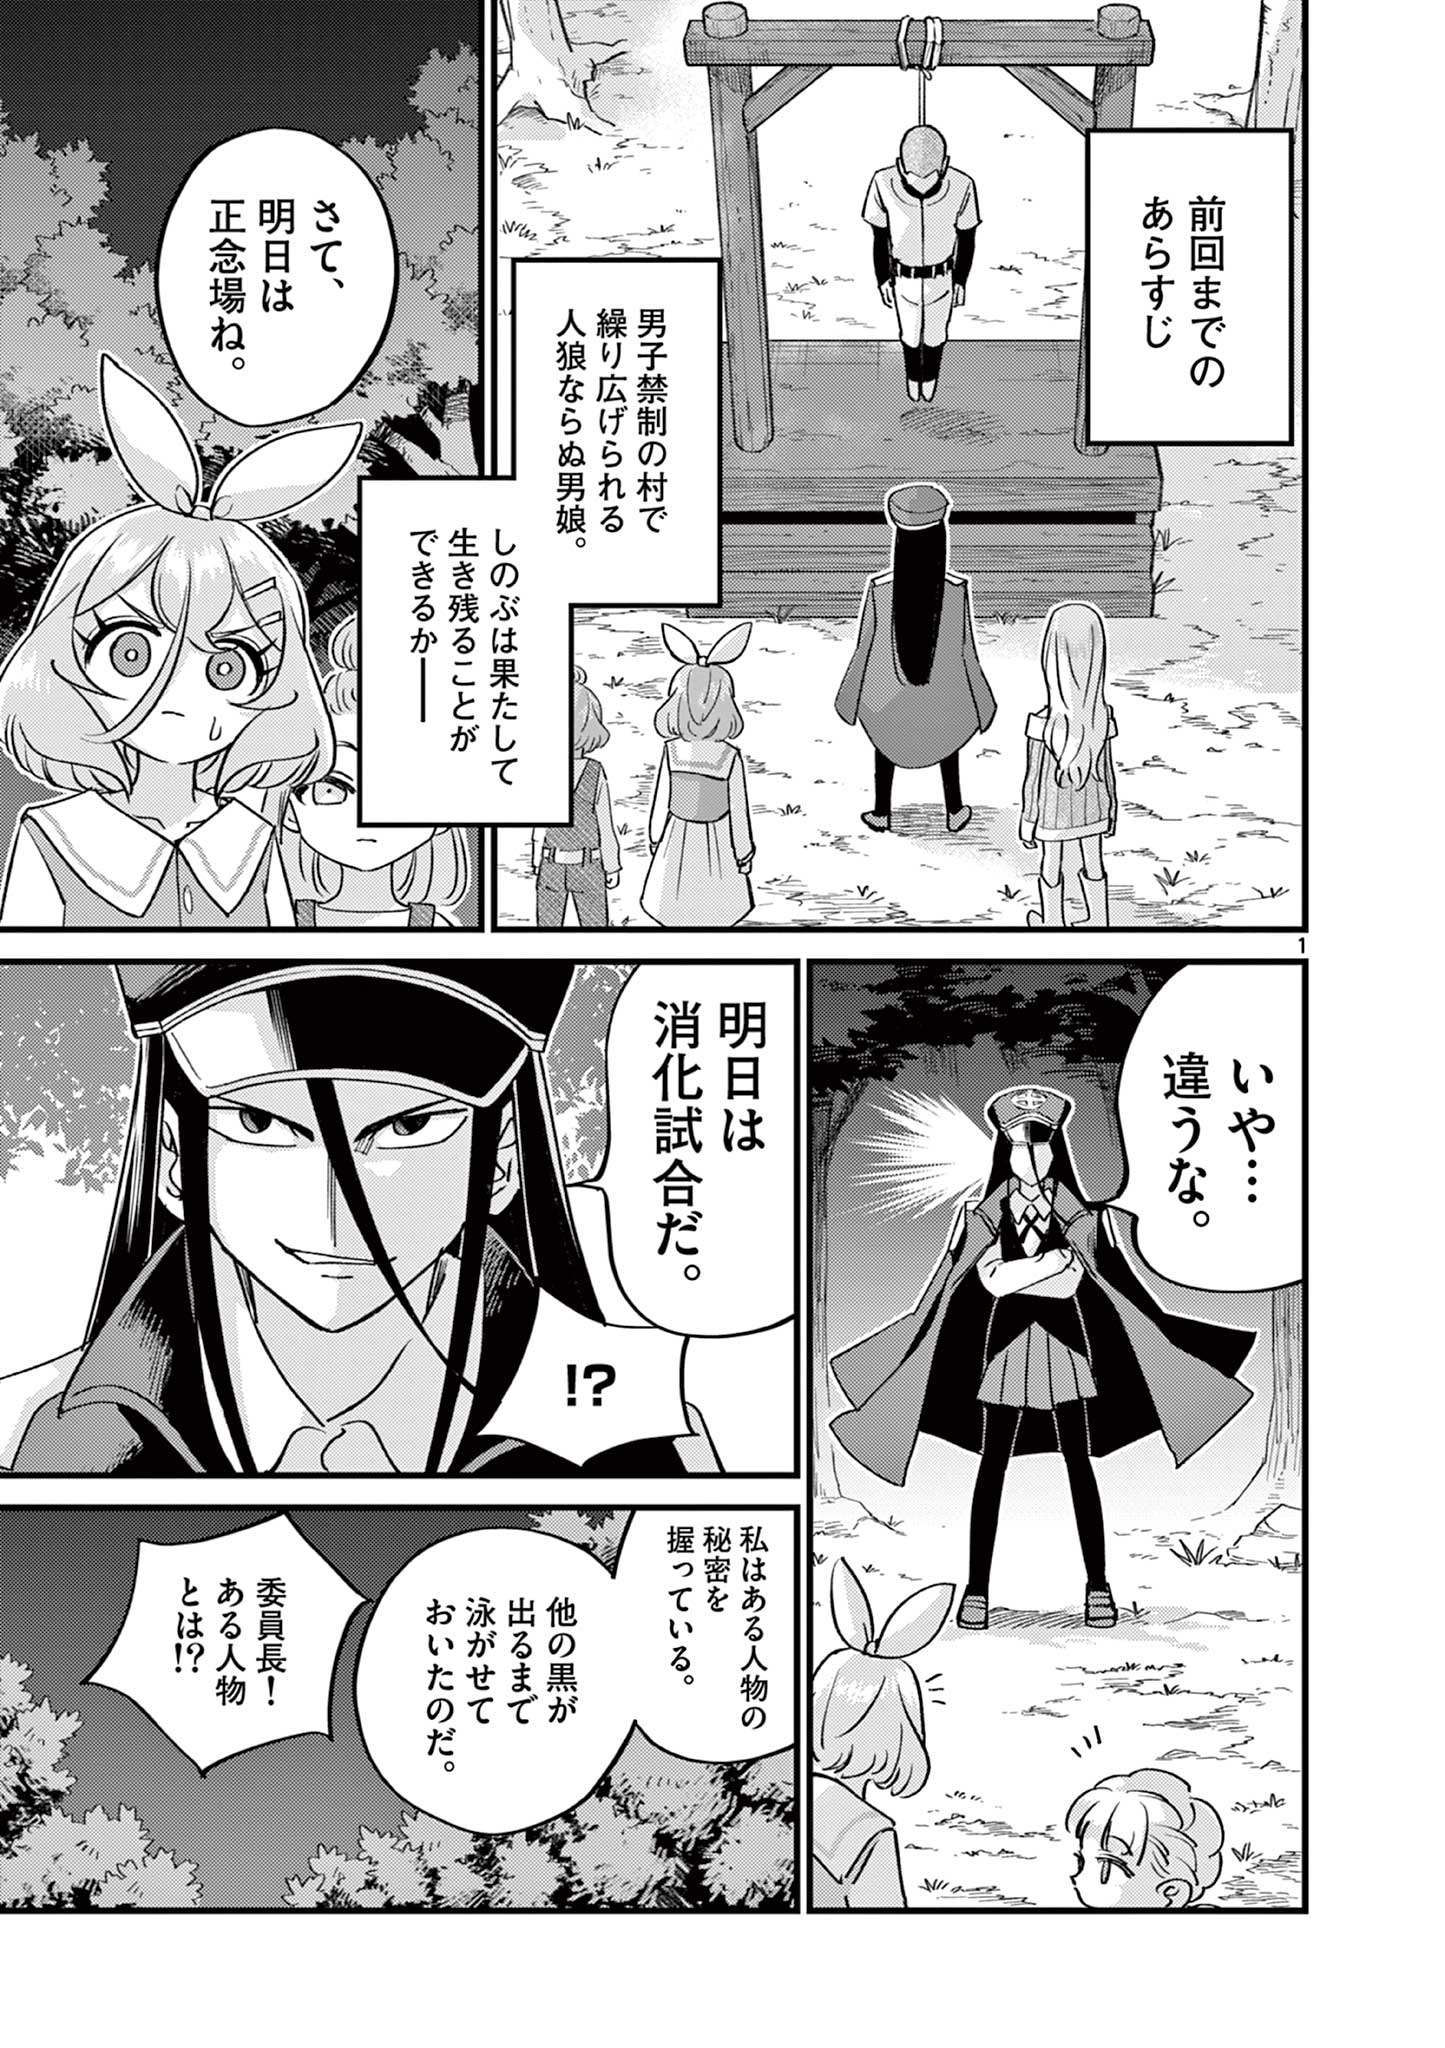 Ranka-chan wa Bitch ni Naritai - Chapter 19 - Page 1